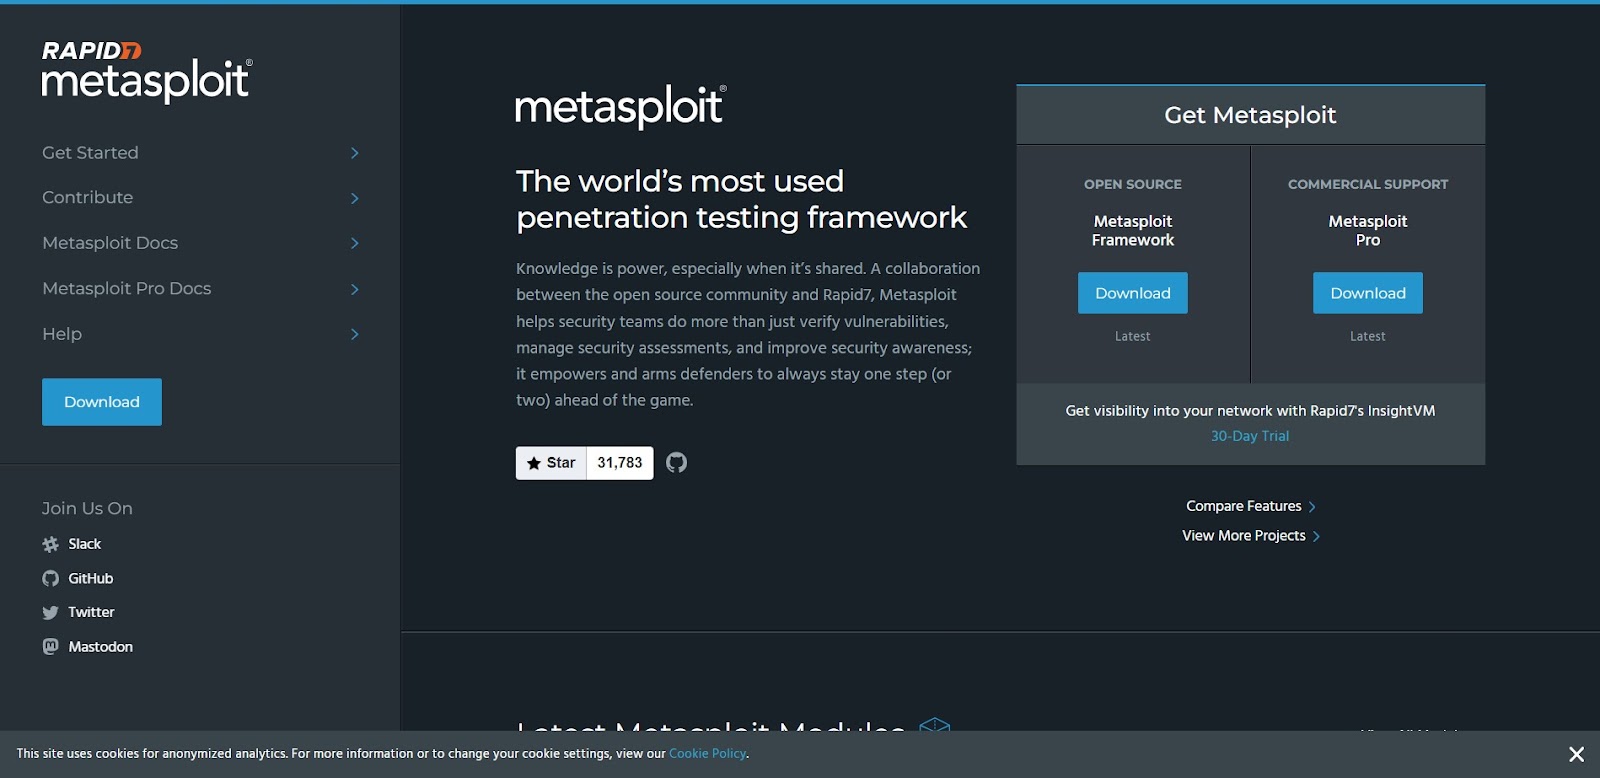 A screenshot of Metasploit's website